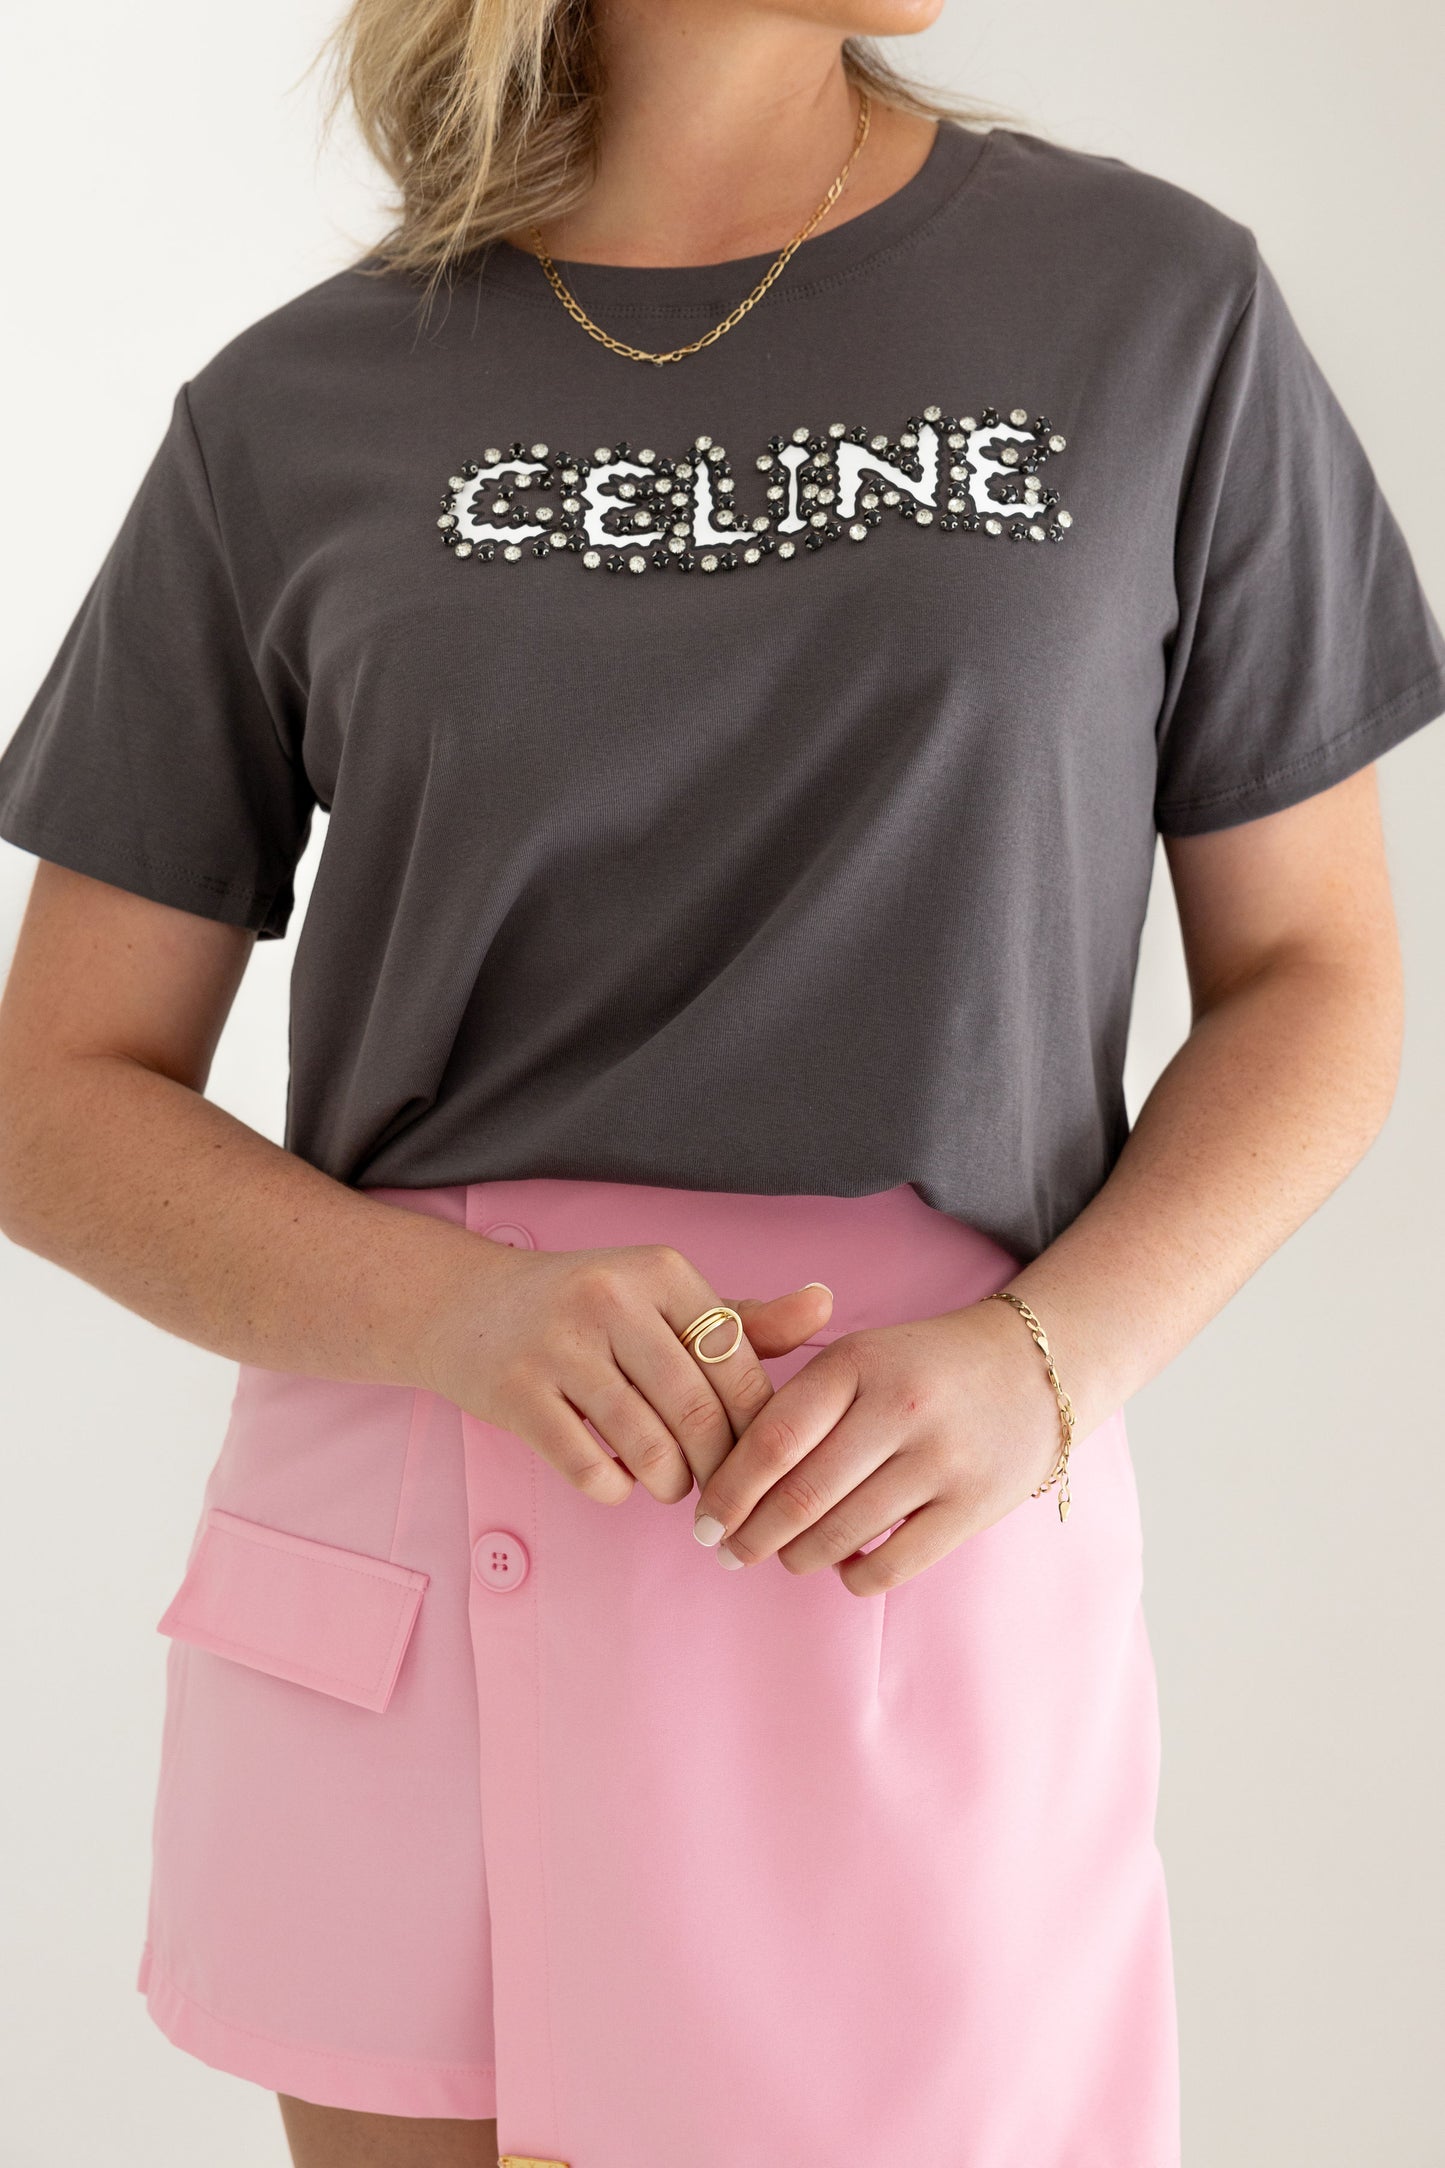 Celine T-shirt hot green / grey